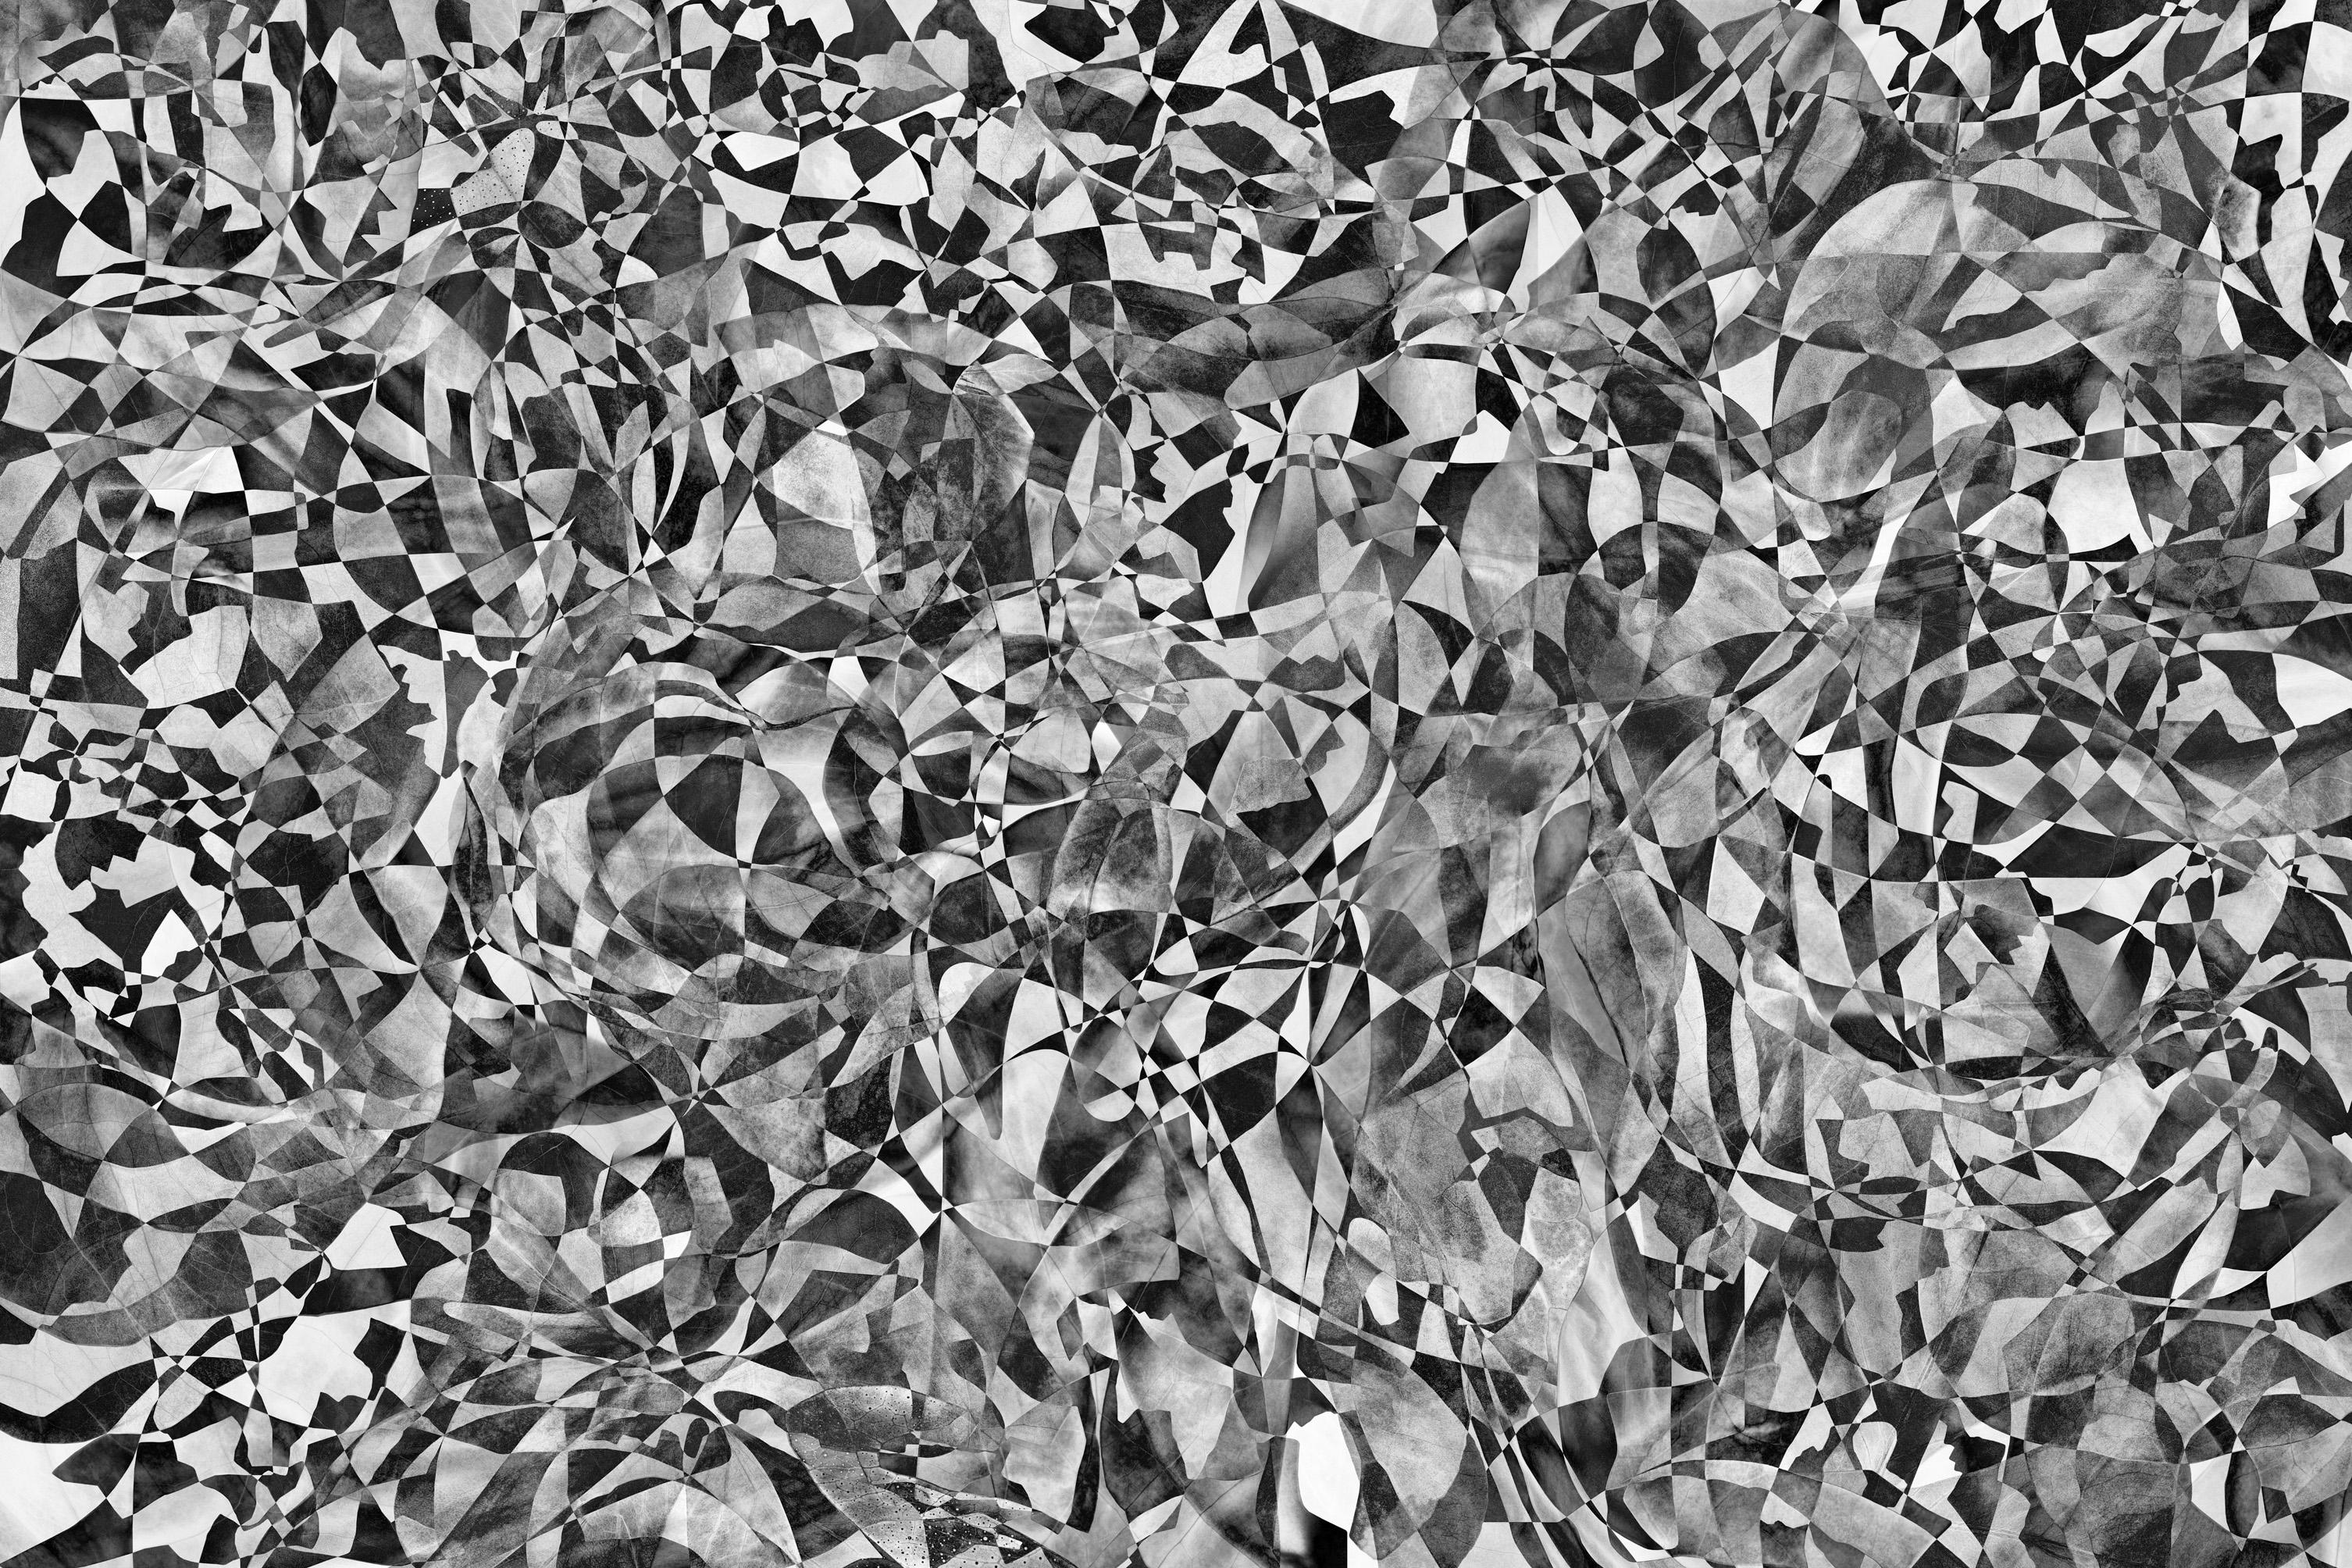 Hubert Blanz Landscape Photograph - Feldforschung 07 - Contemporary Abstract Diamond Texture Photograph